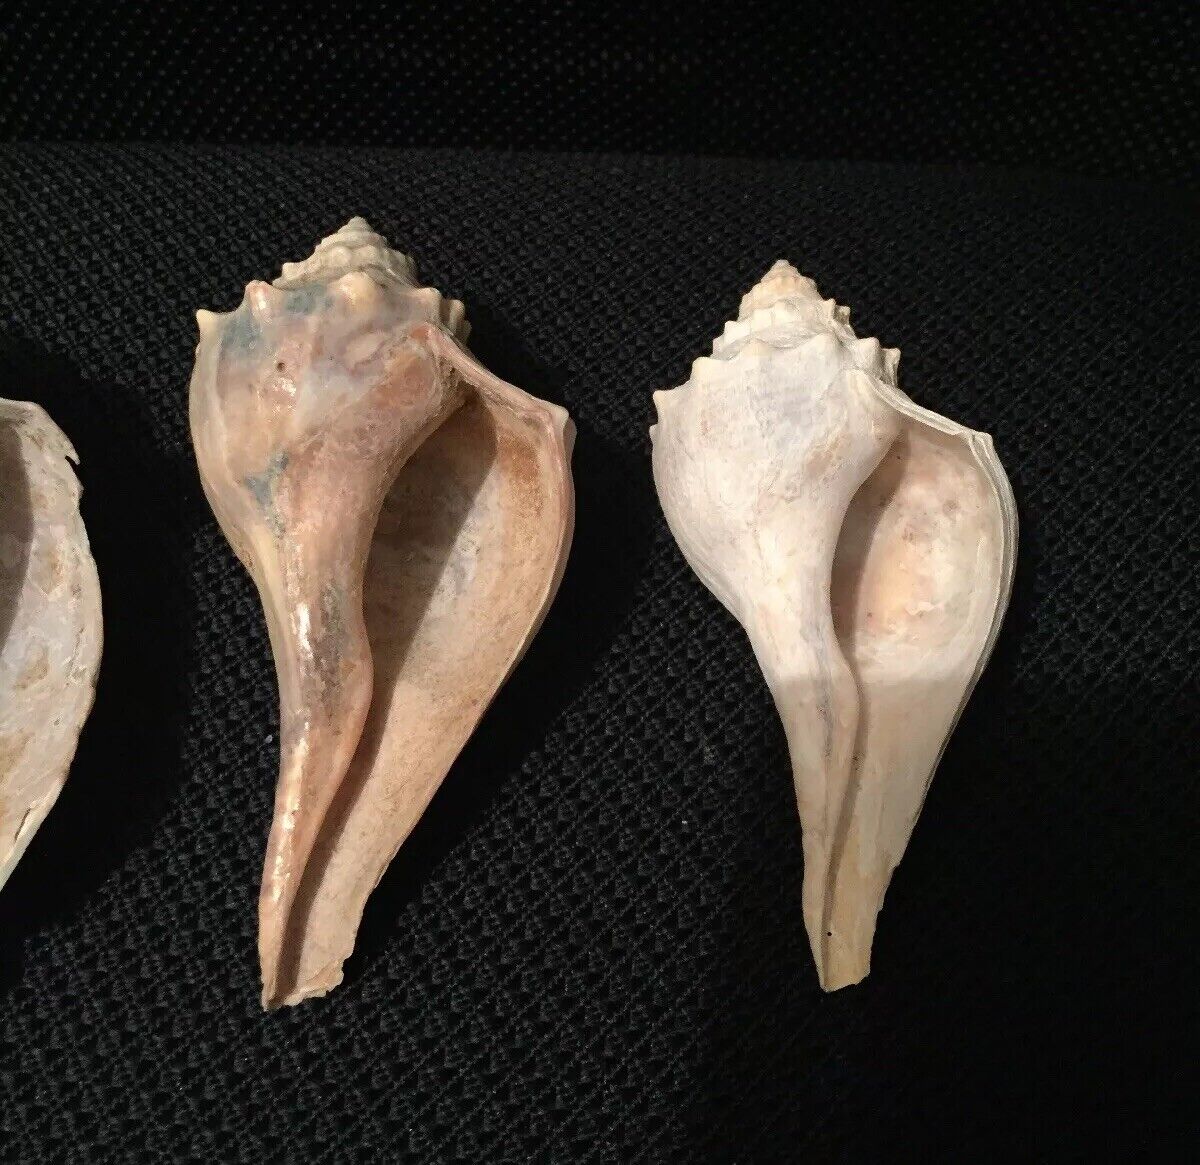 Lot of 3 Medium Queen Conch Sea Shells 4"- 5" Marine Ocean Seashore Decor Crafts Без бренда - фотография #8